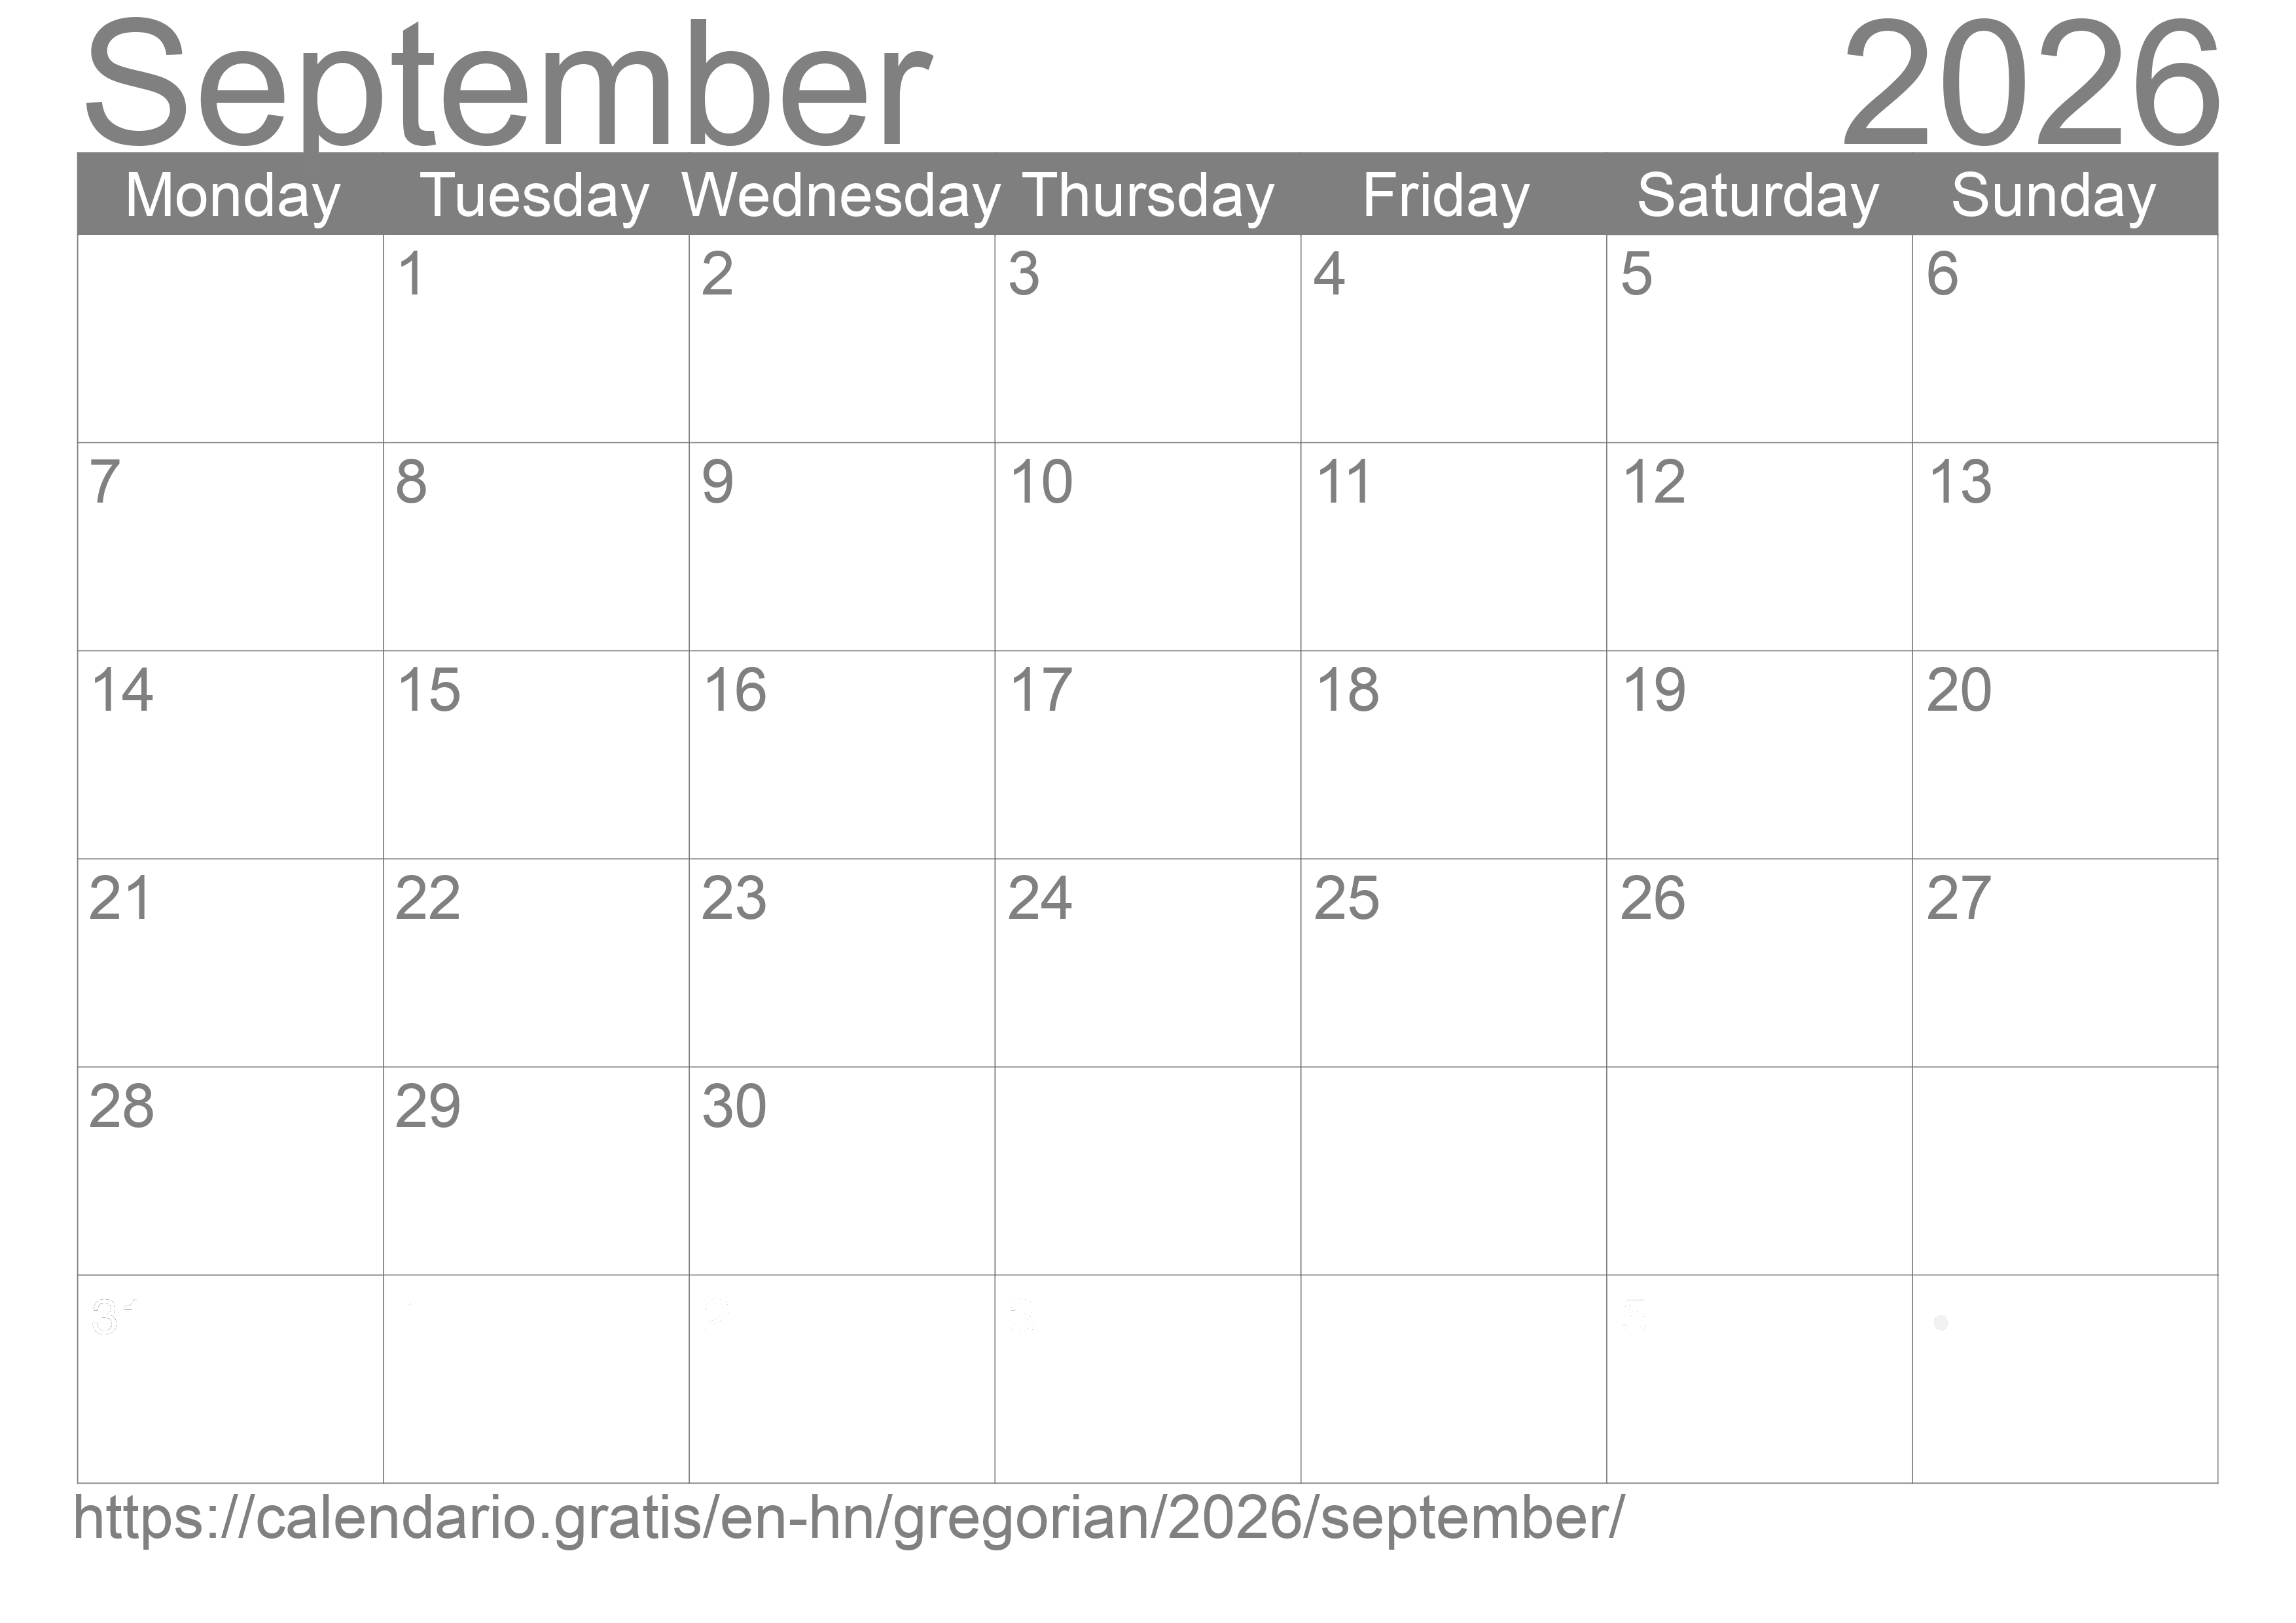 Calendar September 2026 to print